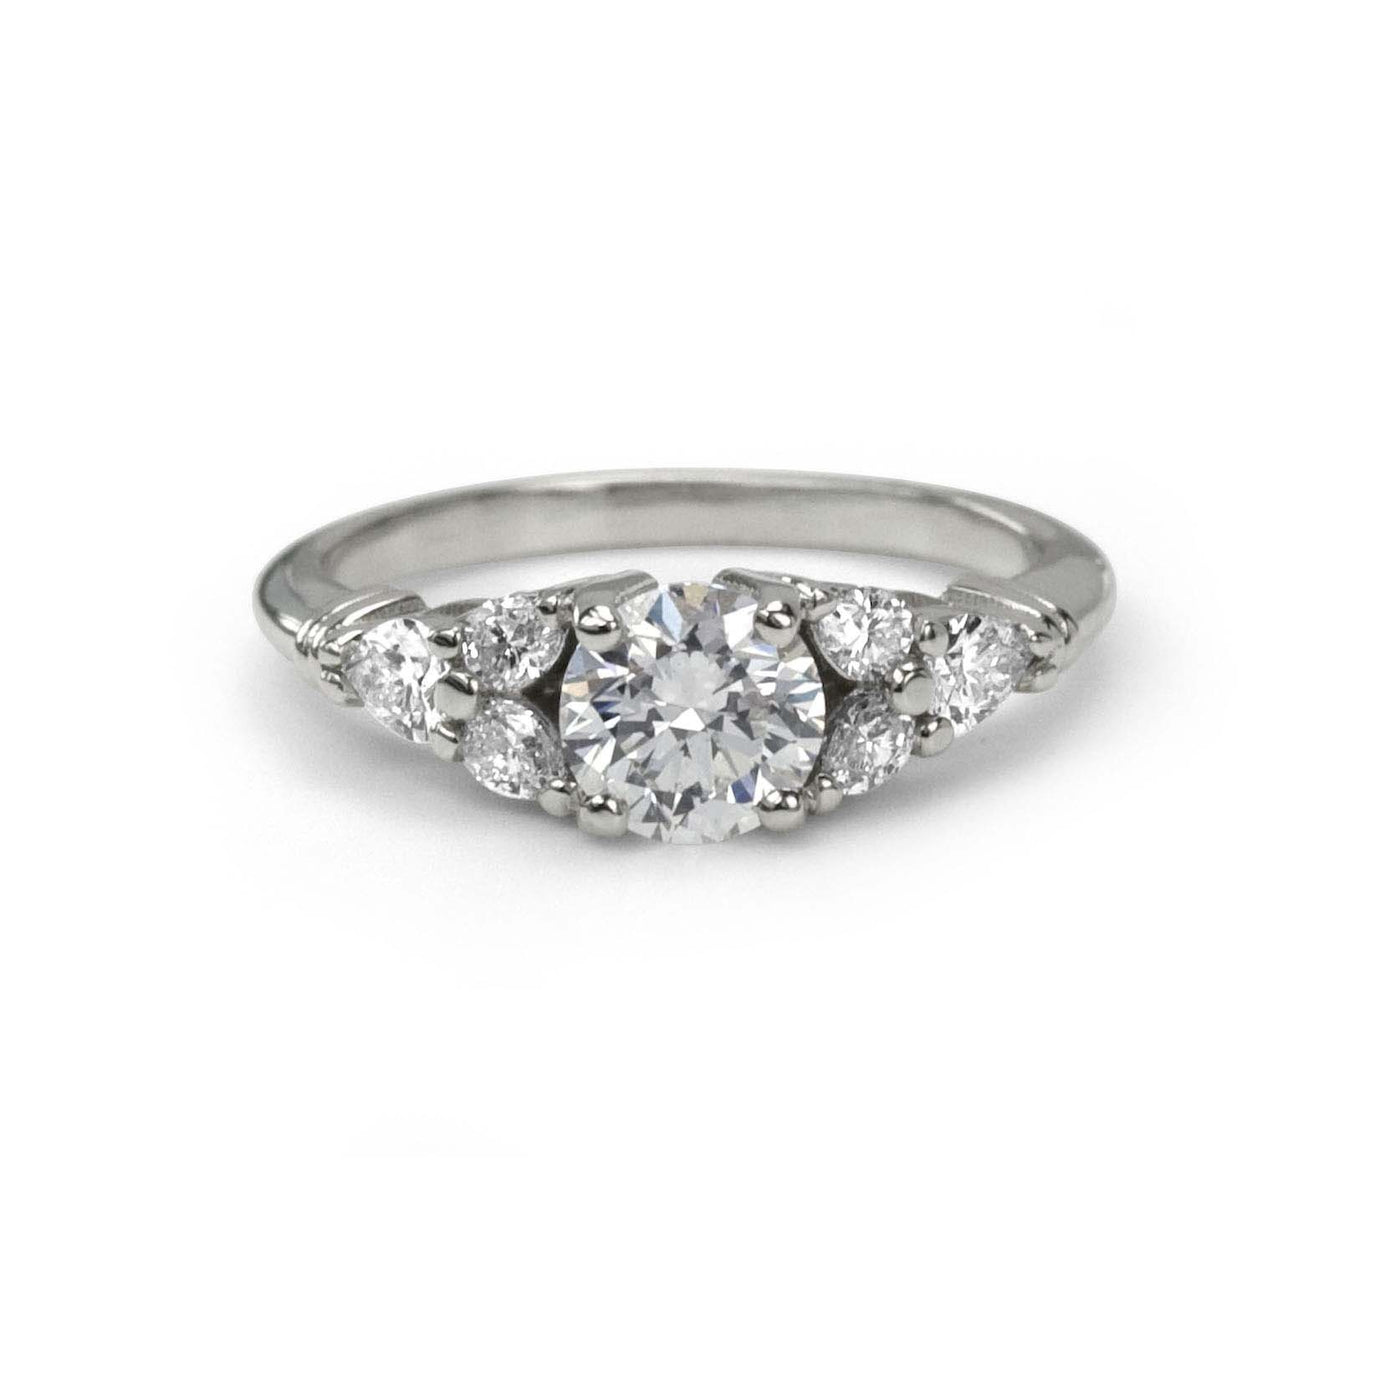 Vintage-Inspired Seven Stone Diamond Engagement Ring